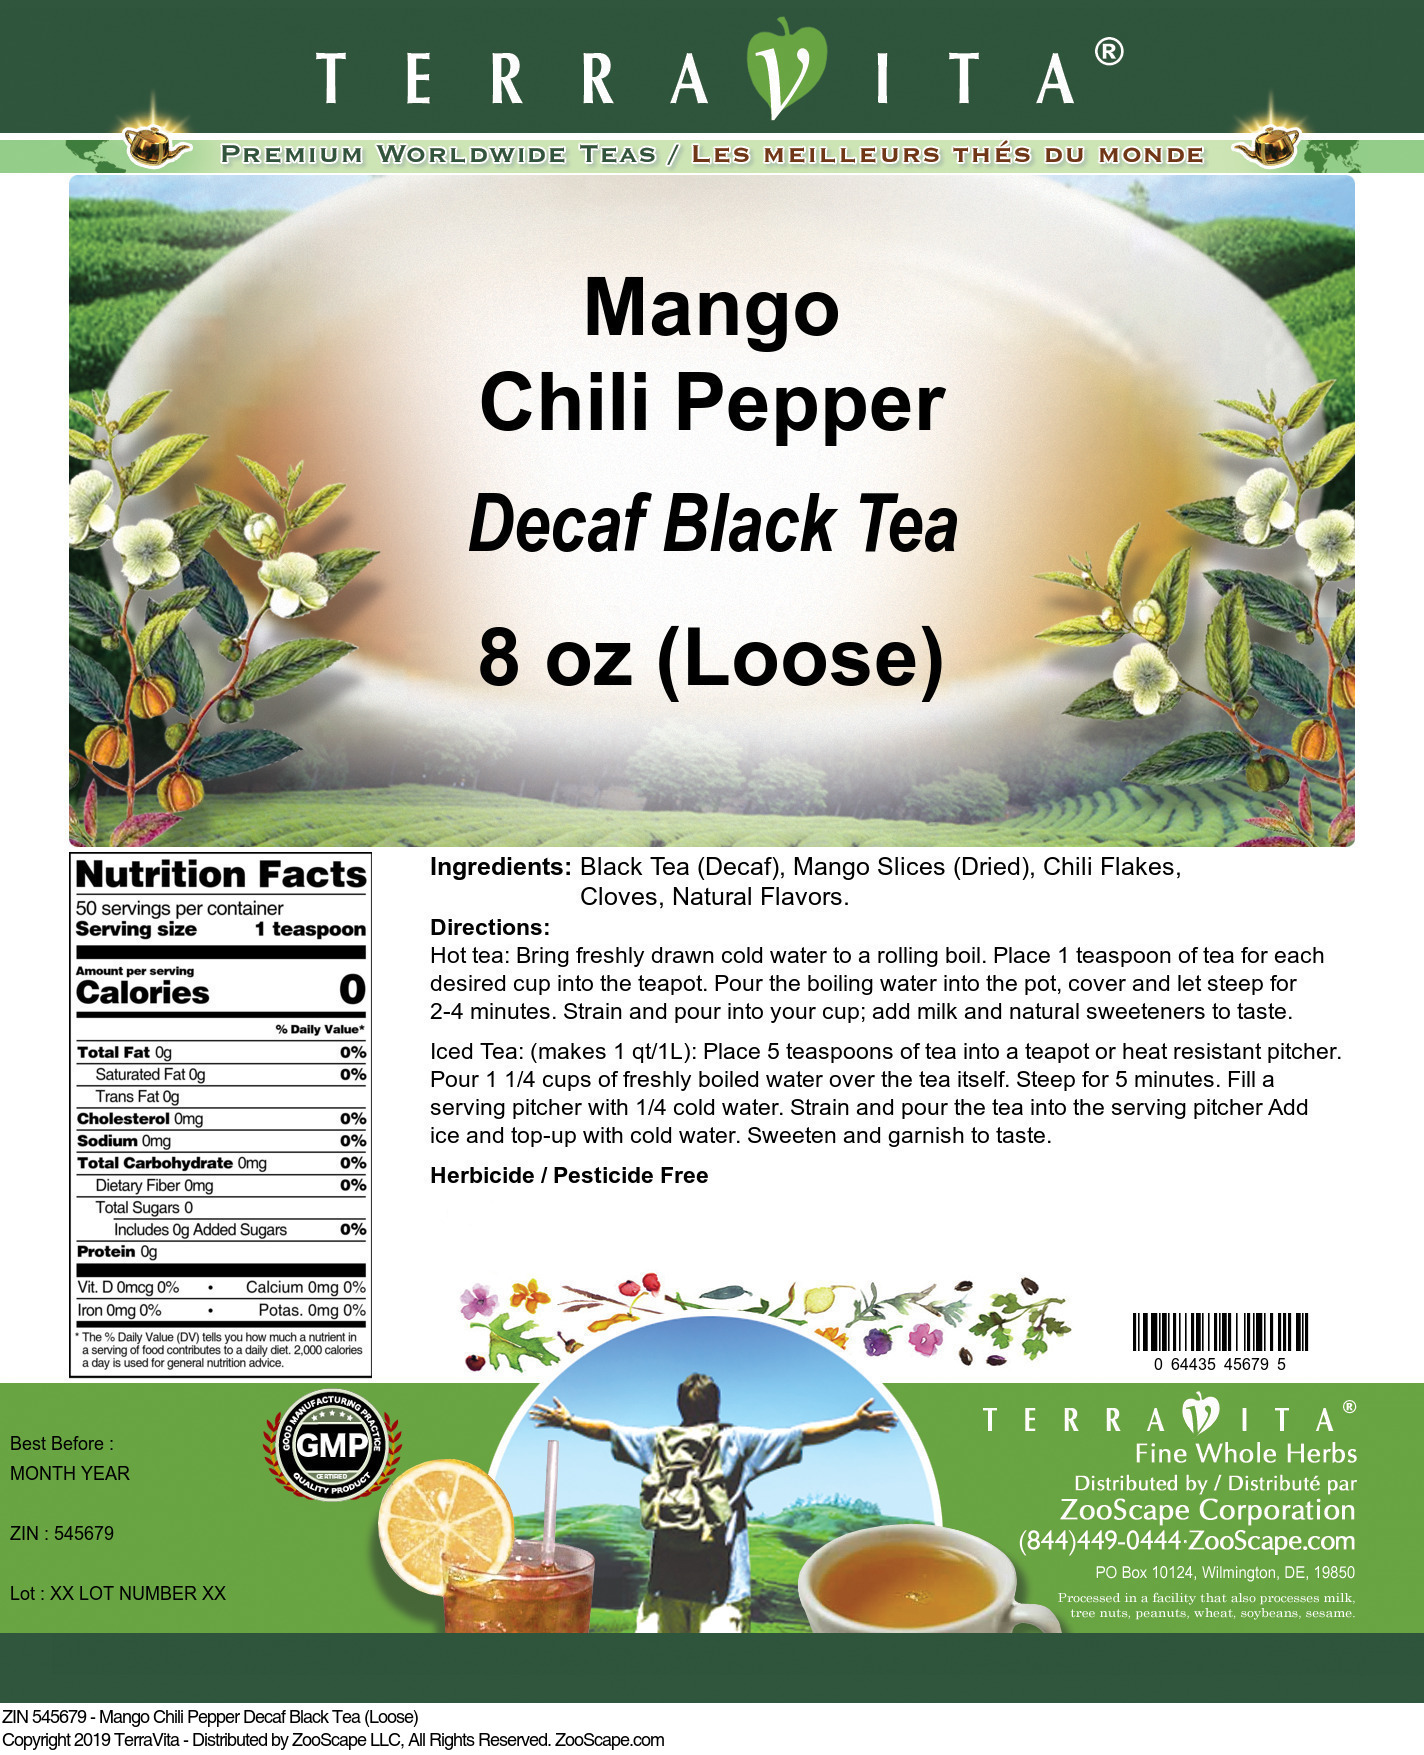 Mango Chili Pepper Decaf Black Tea (Loose) - Label